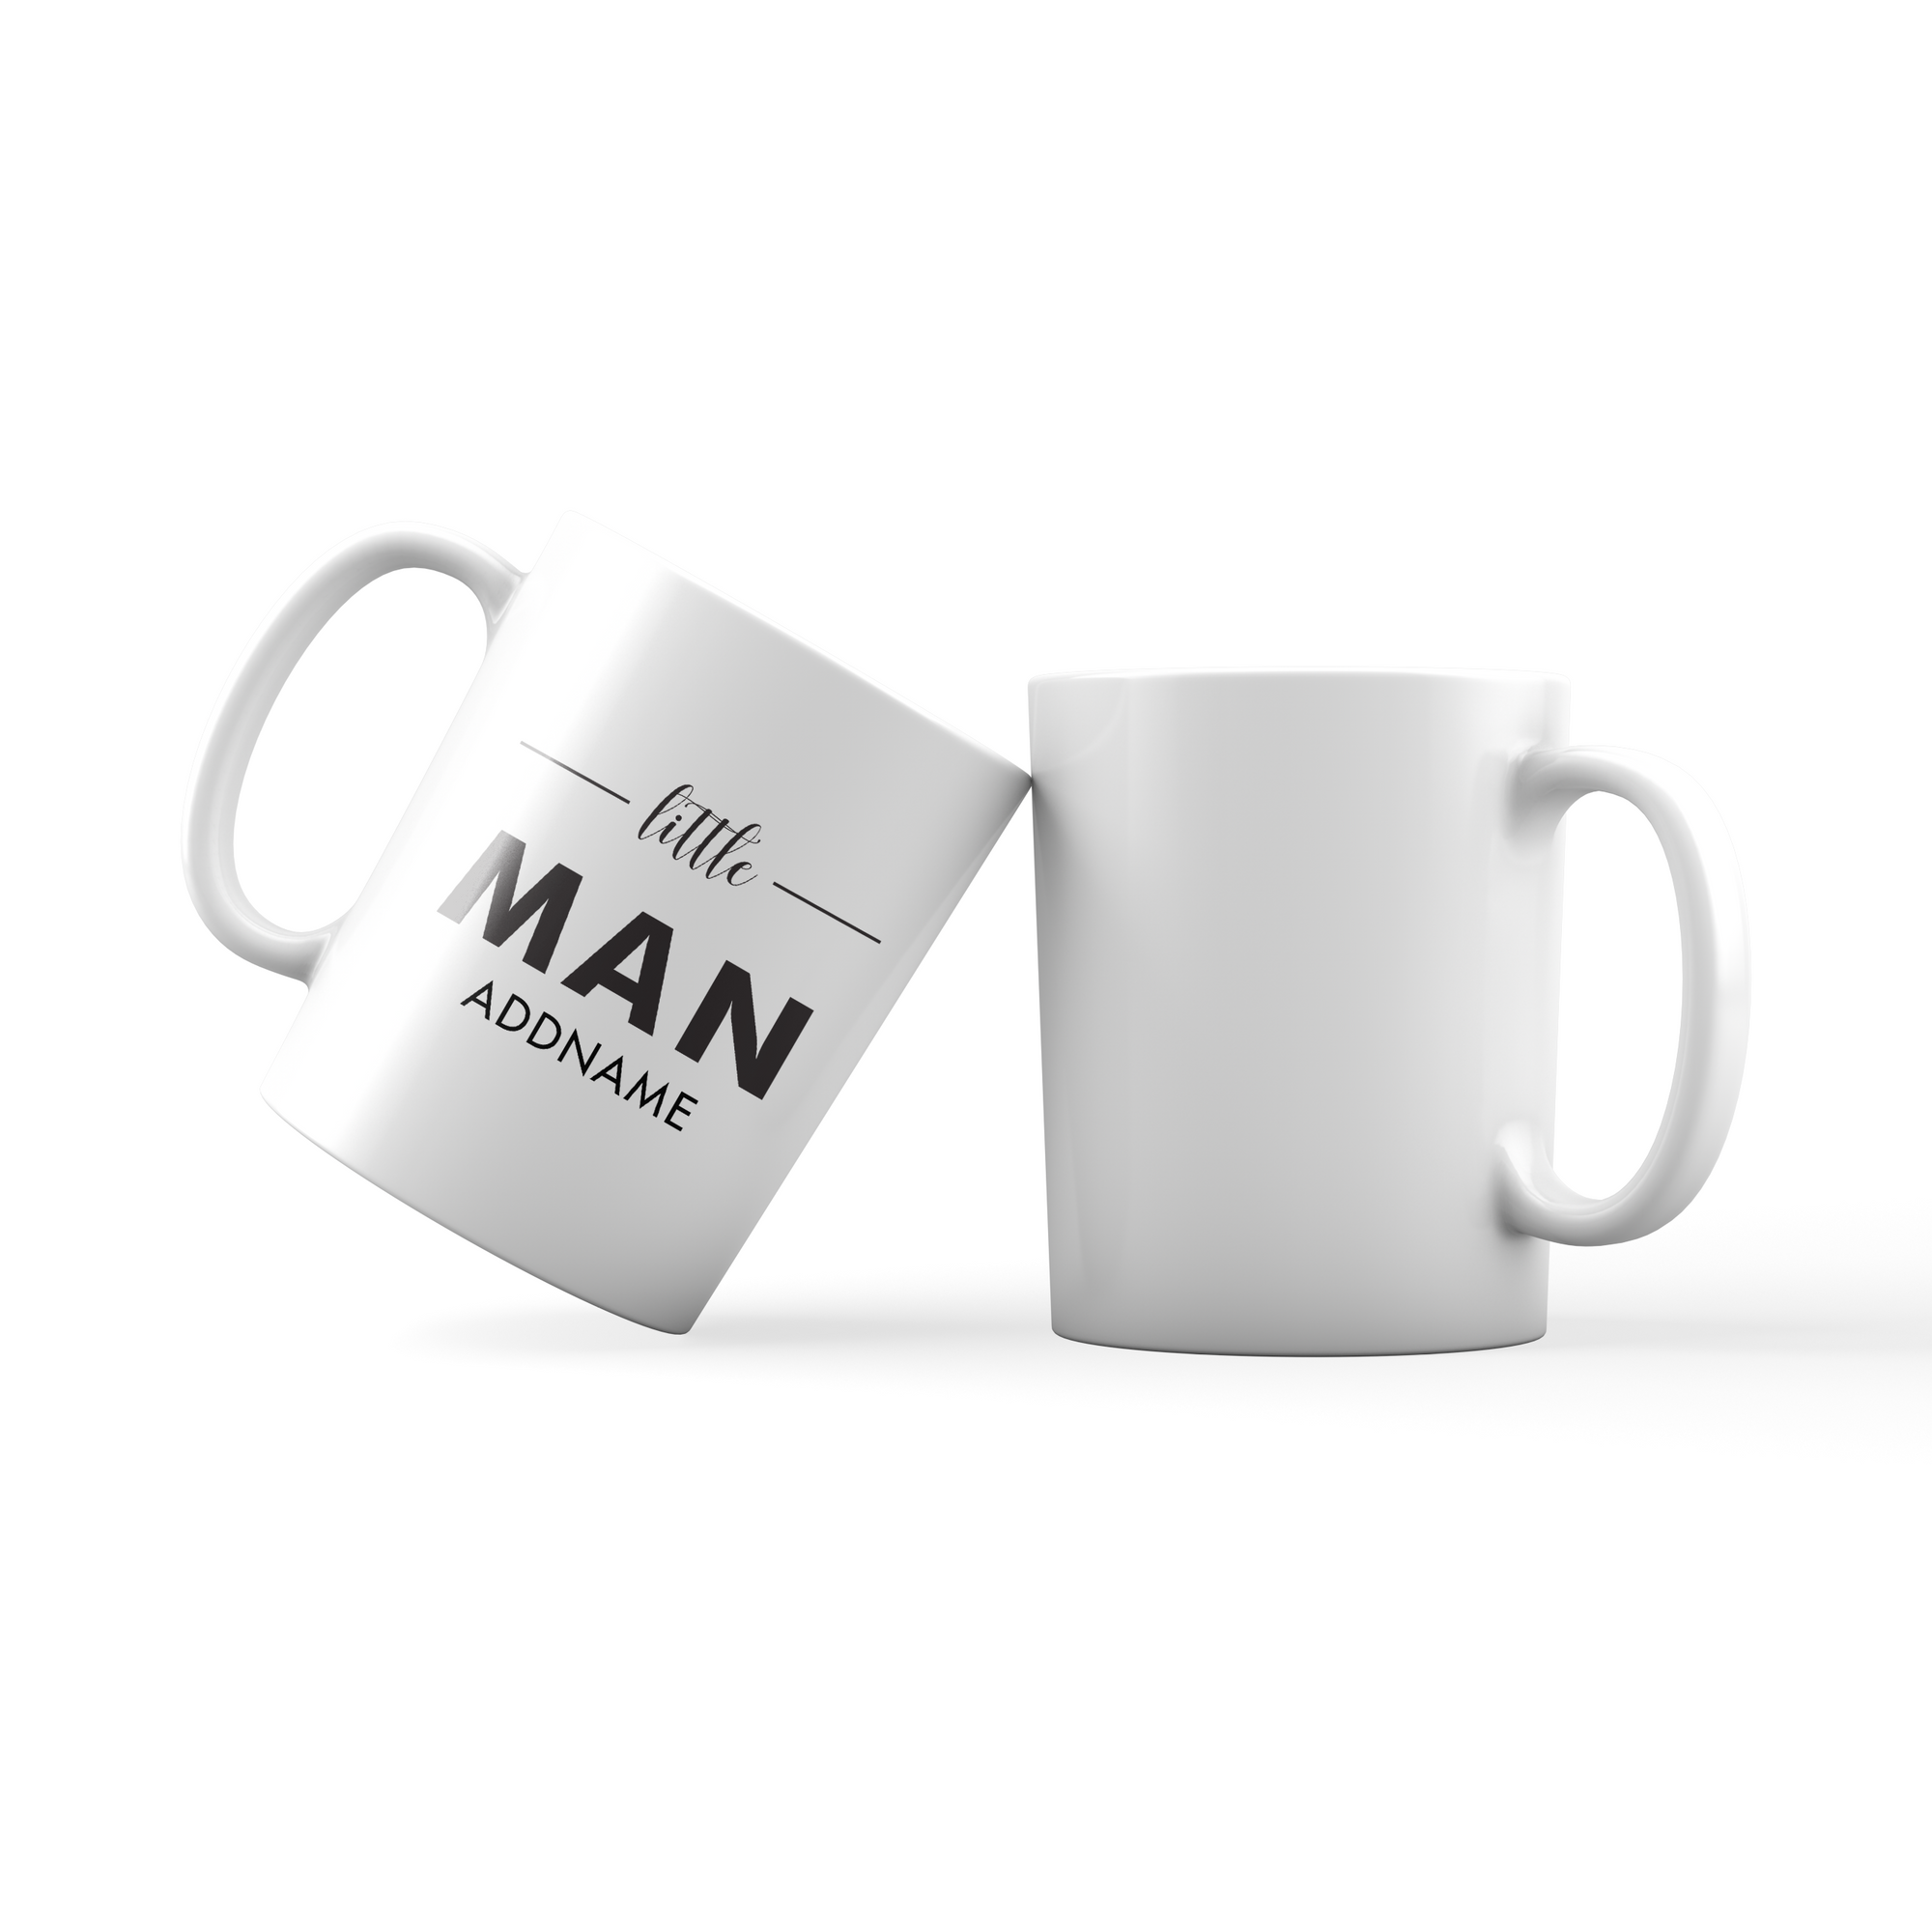 Little Man Addname Mug